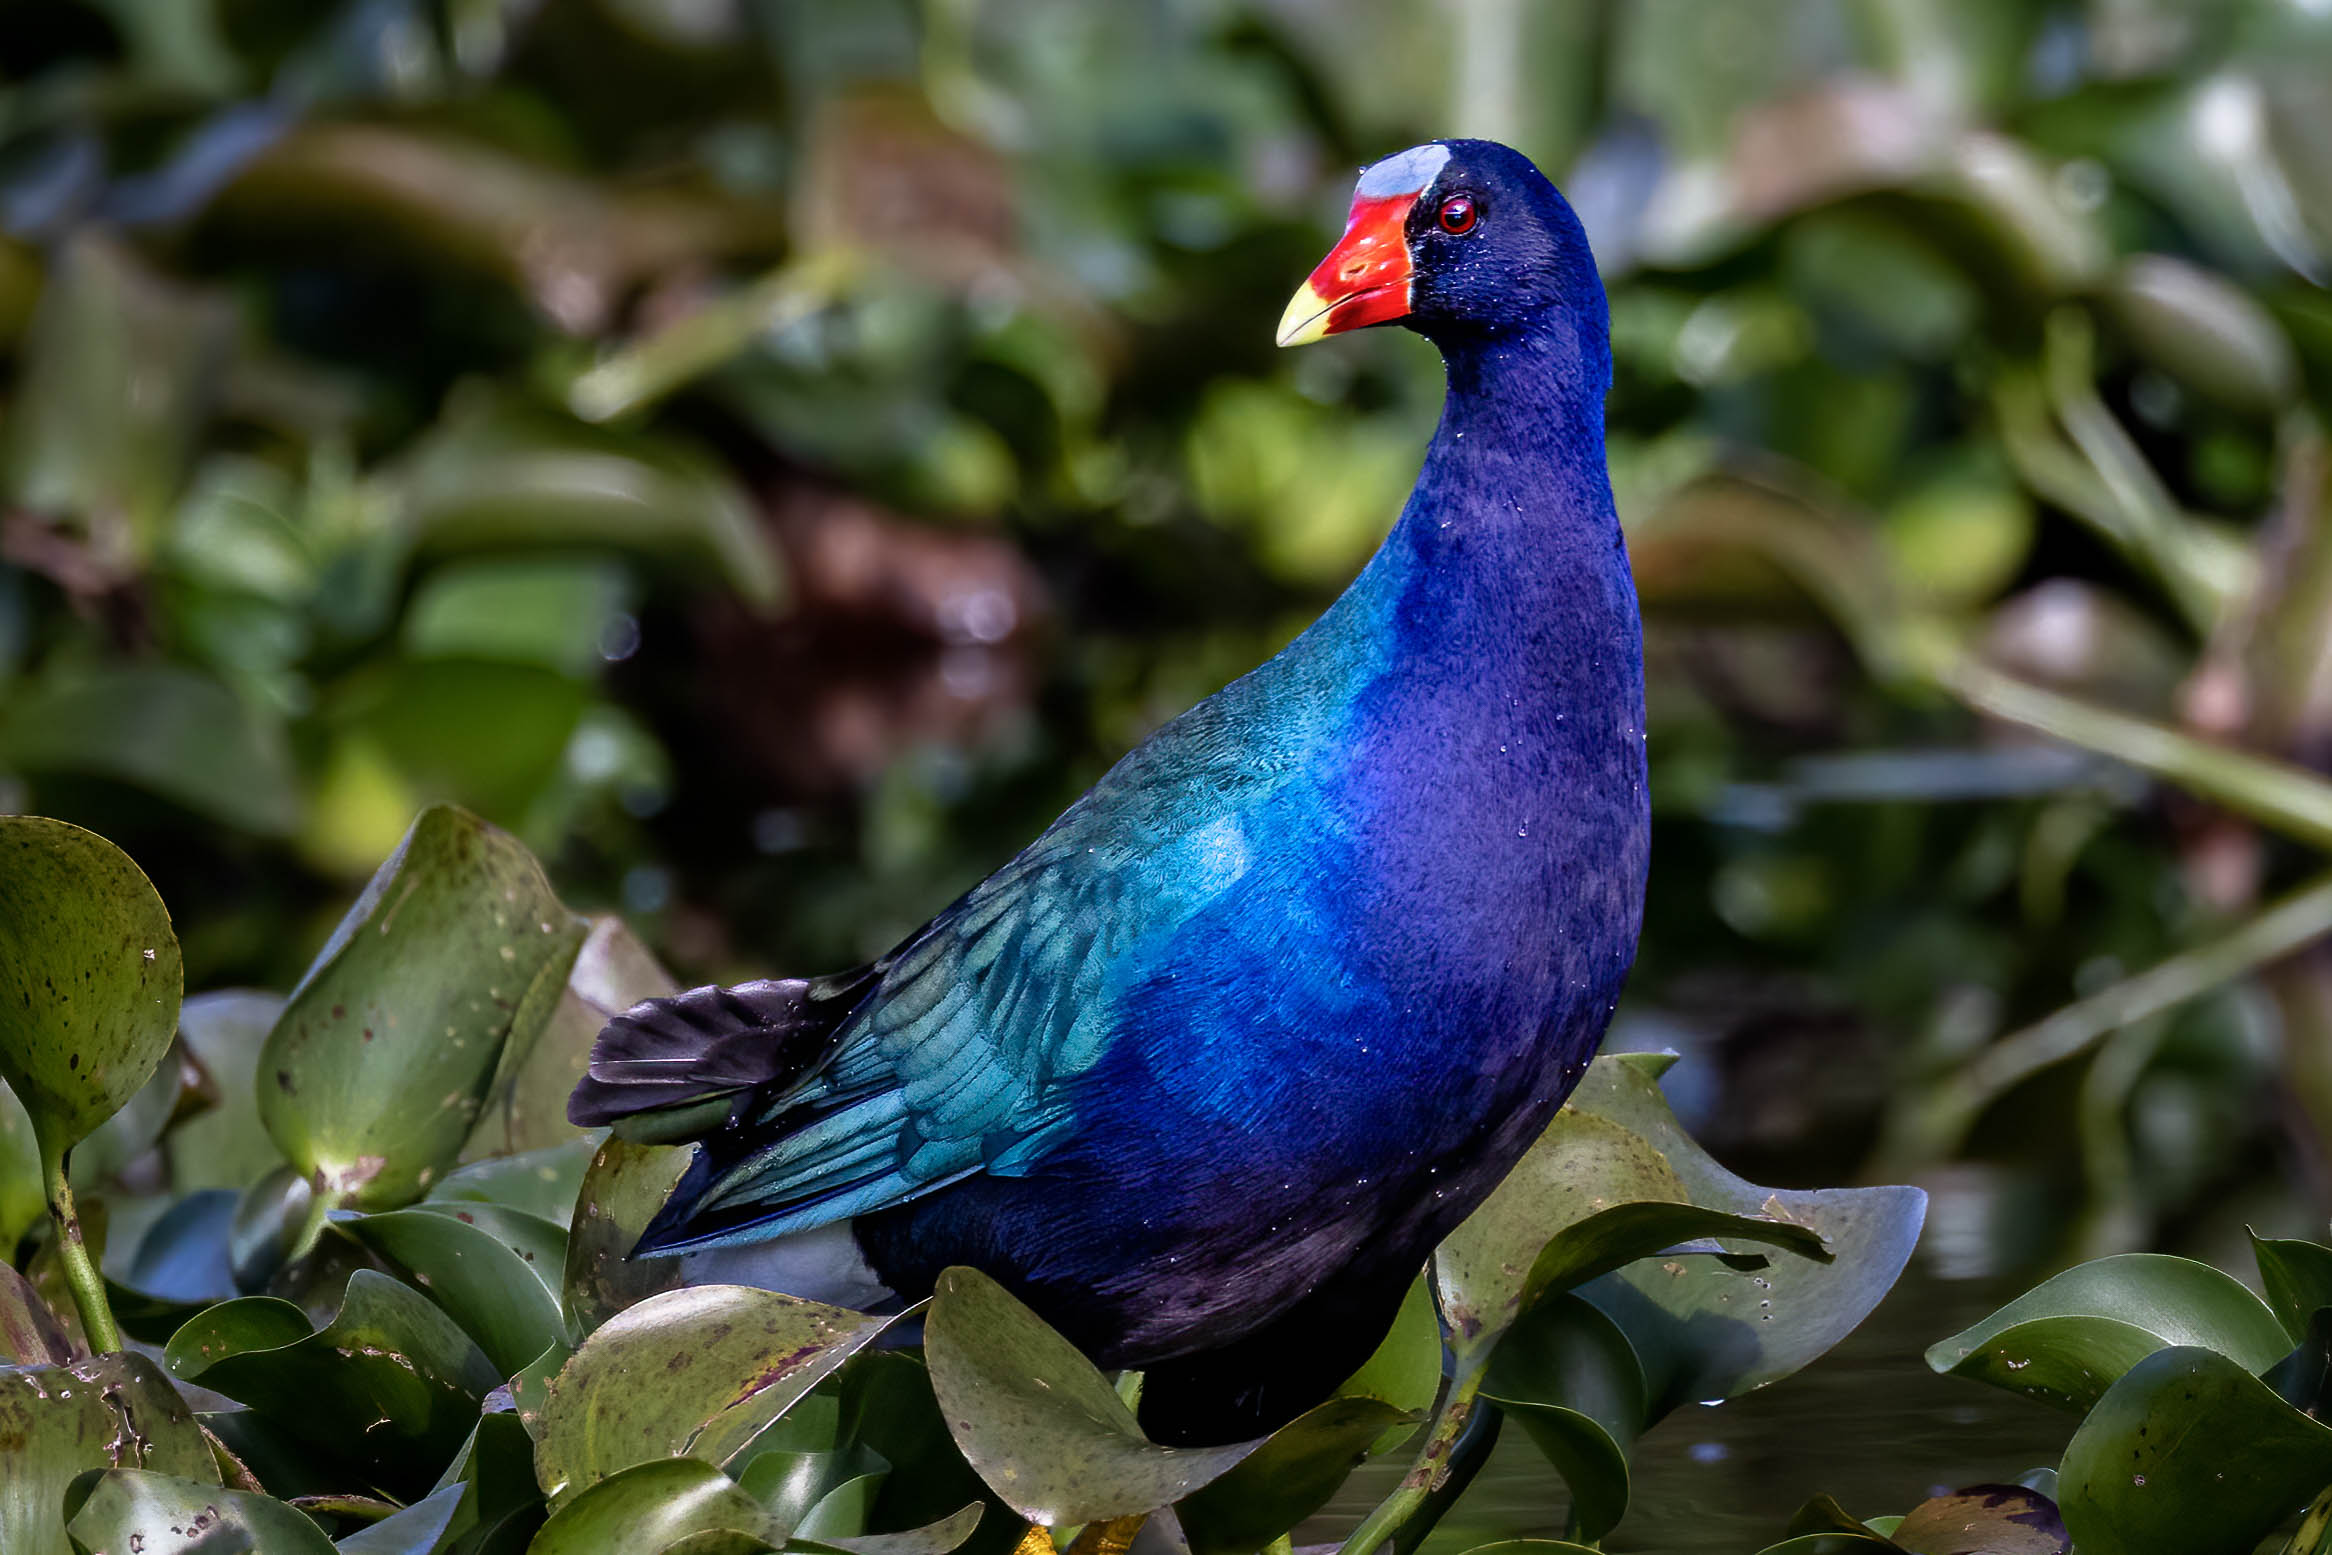 A shiny blue bird in greenery